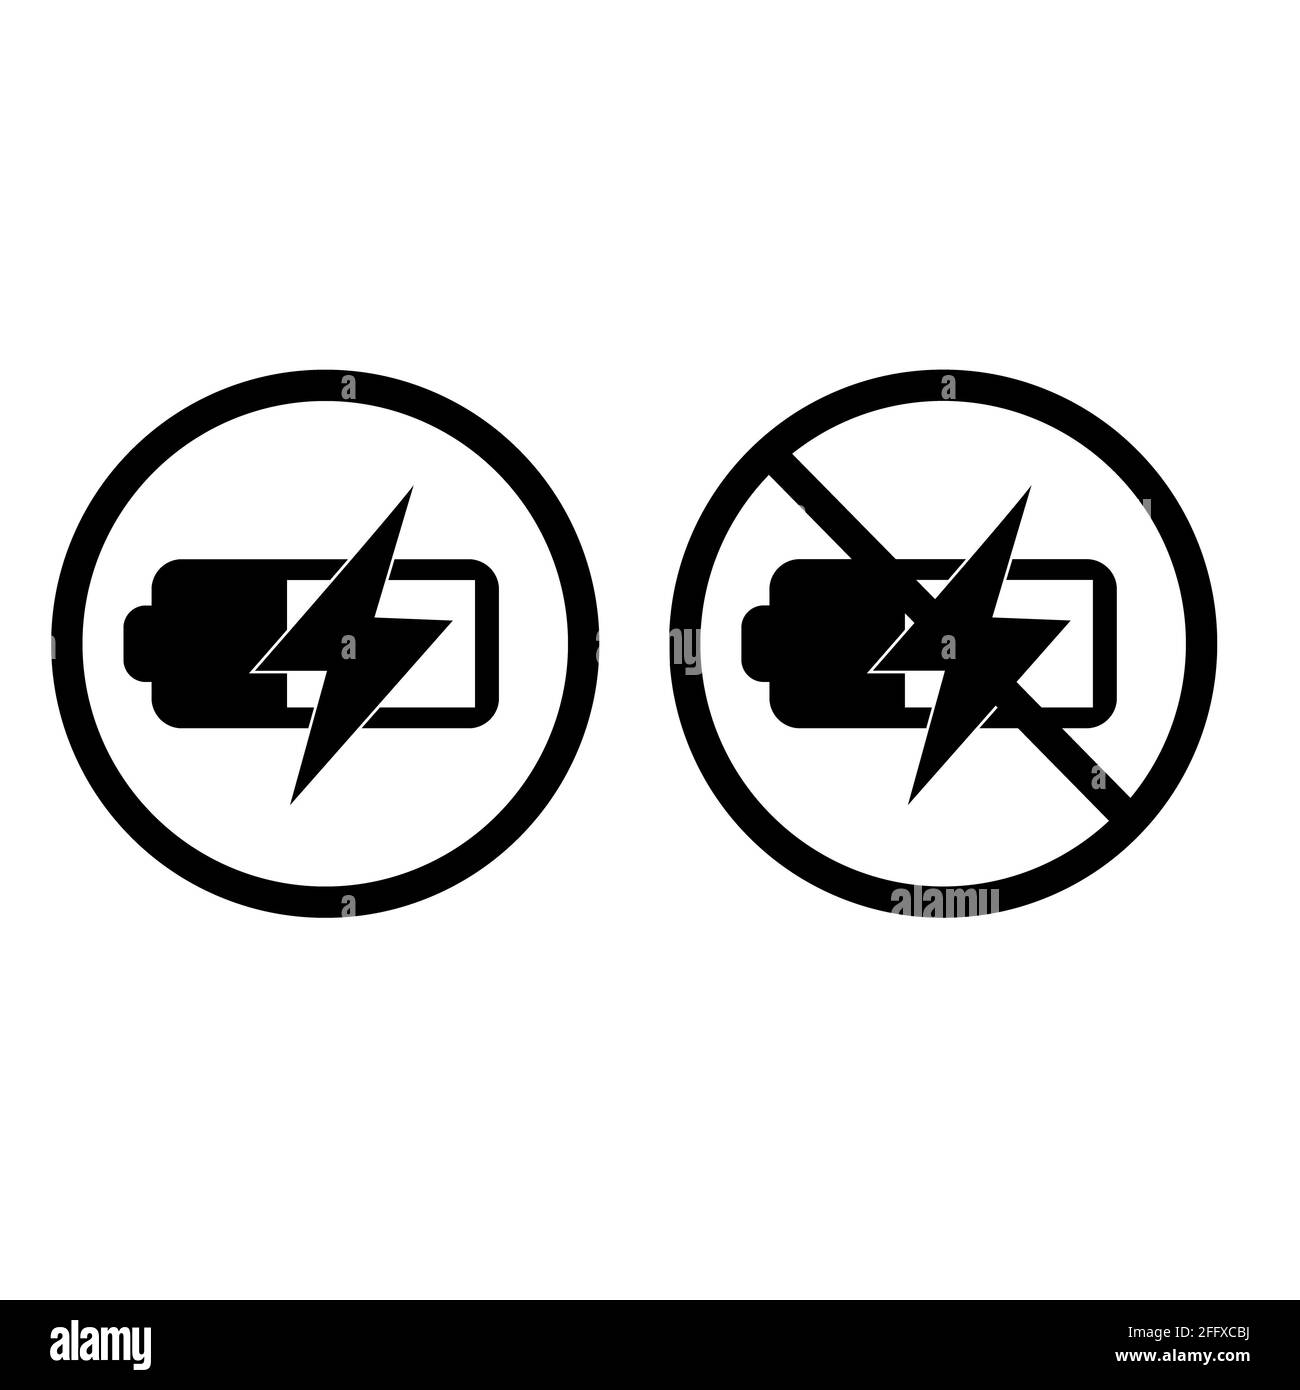 Battery warning label Banque d'images noir et blanc - Alamy